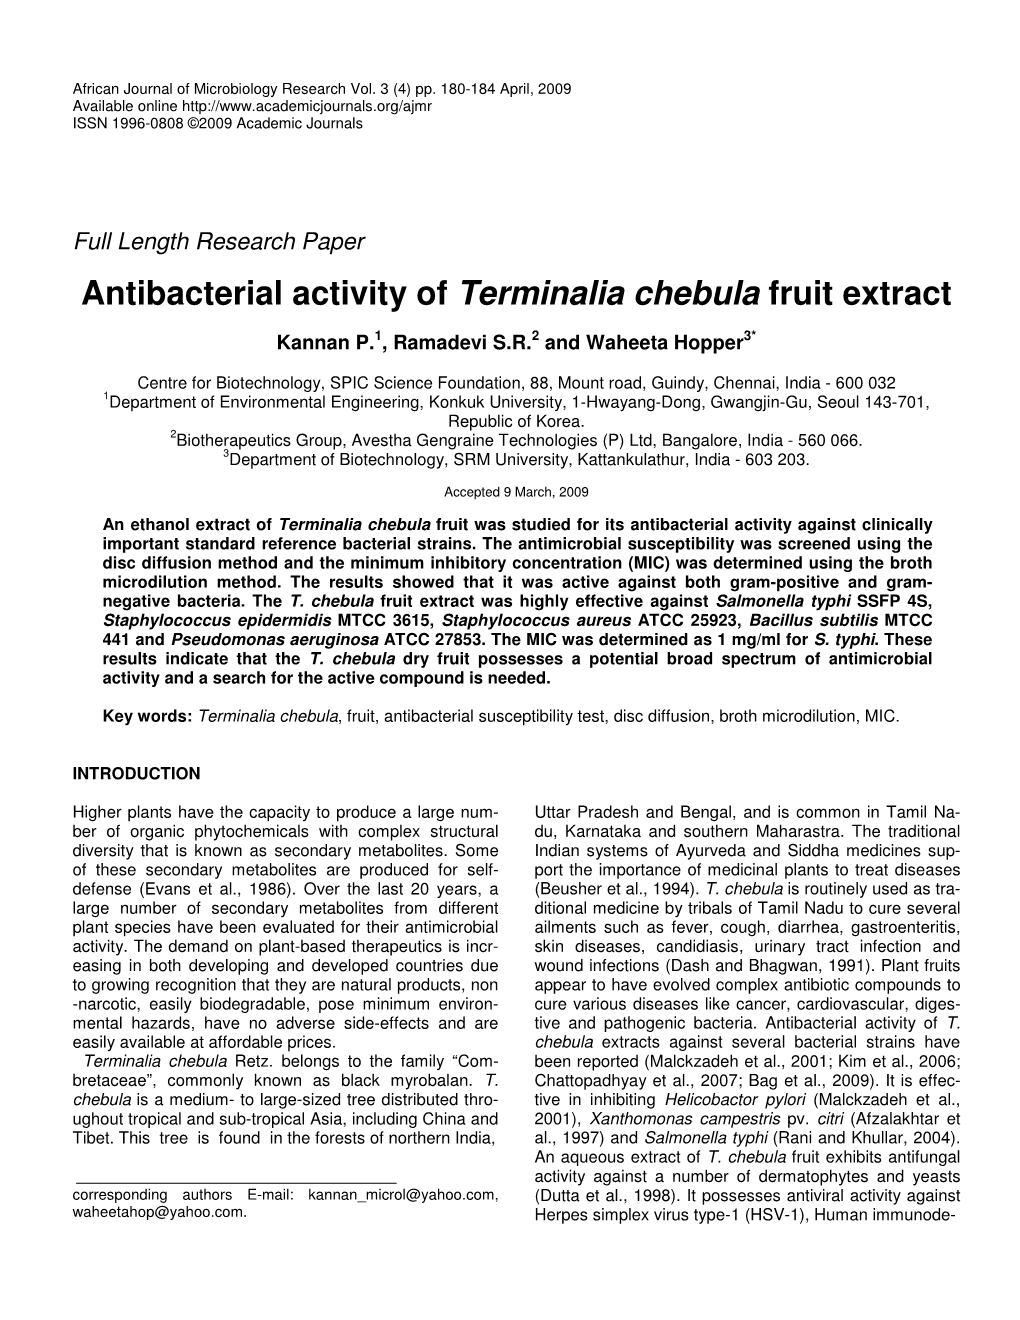 Antibacterial Activity of Terminalia Chebula Fruit Extract